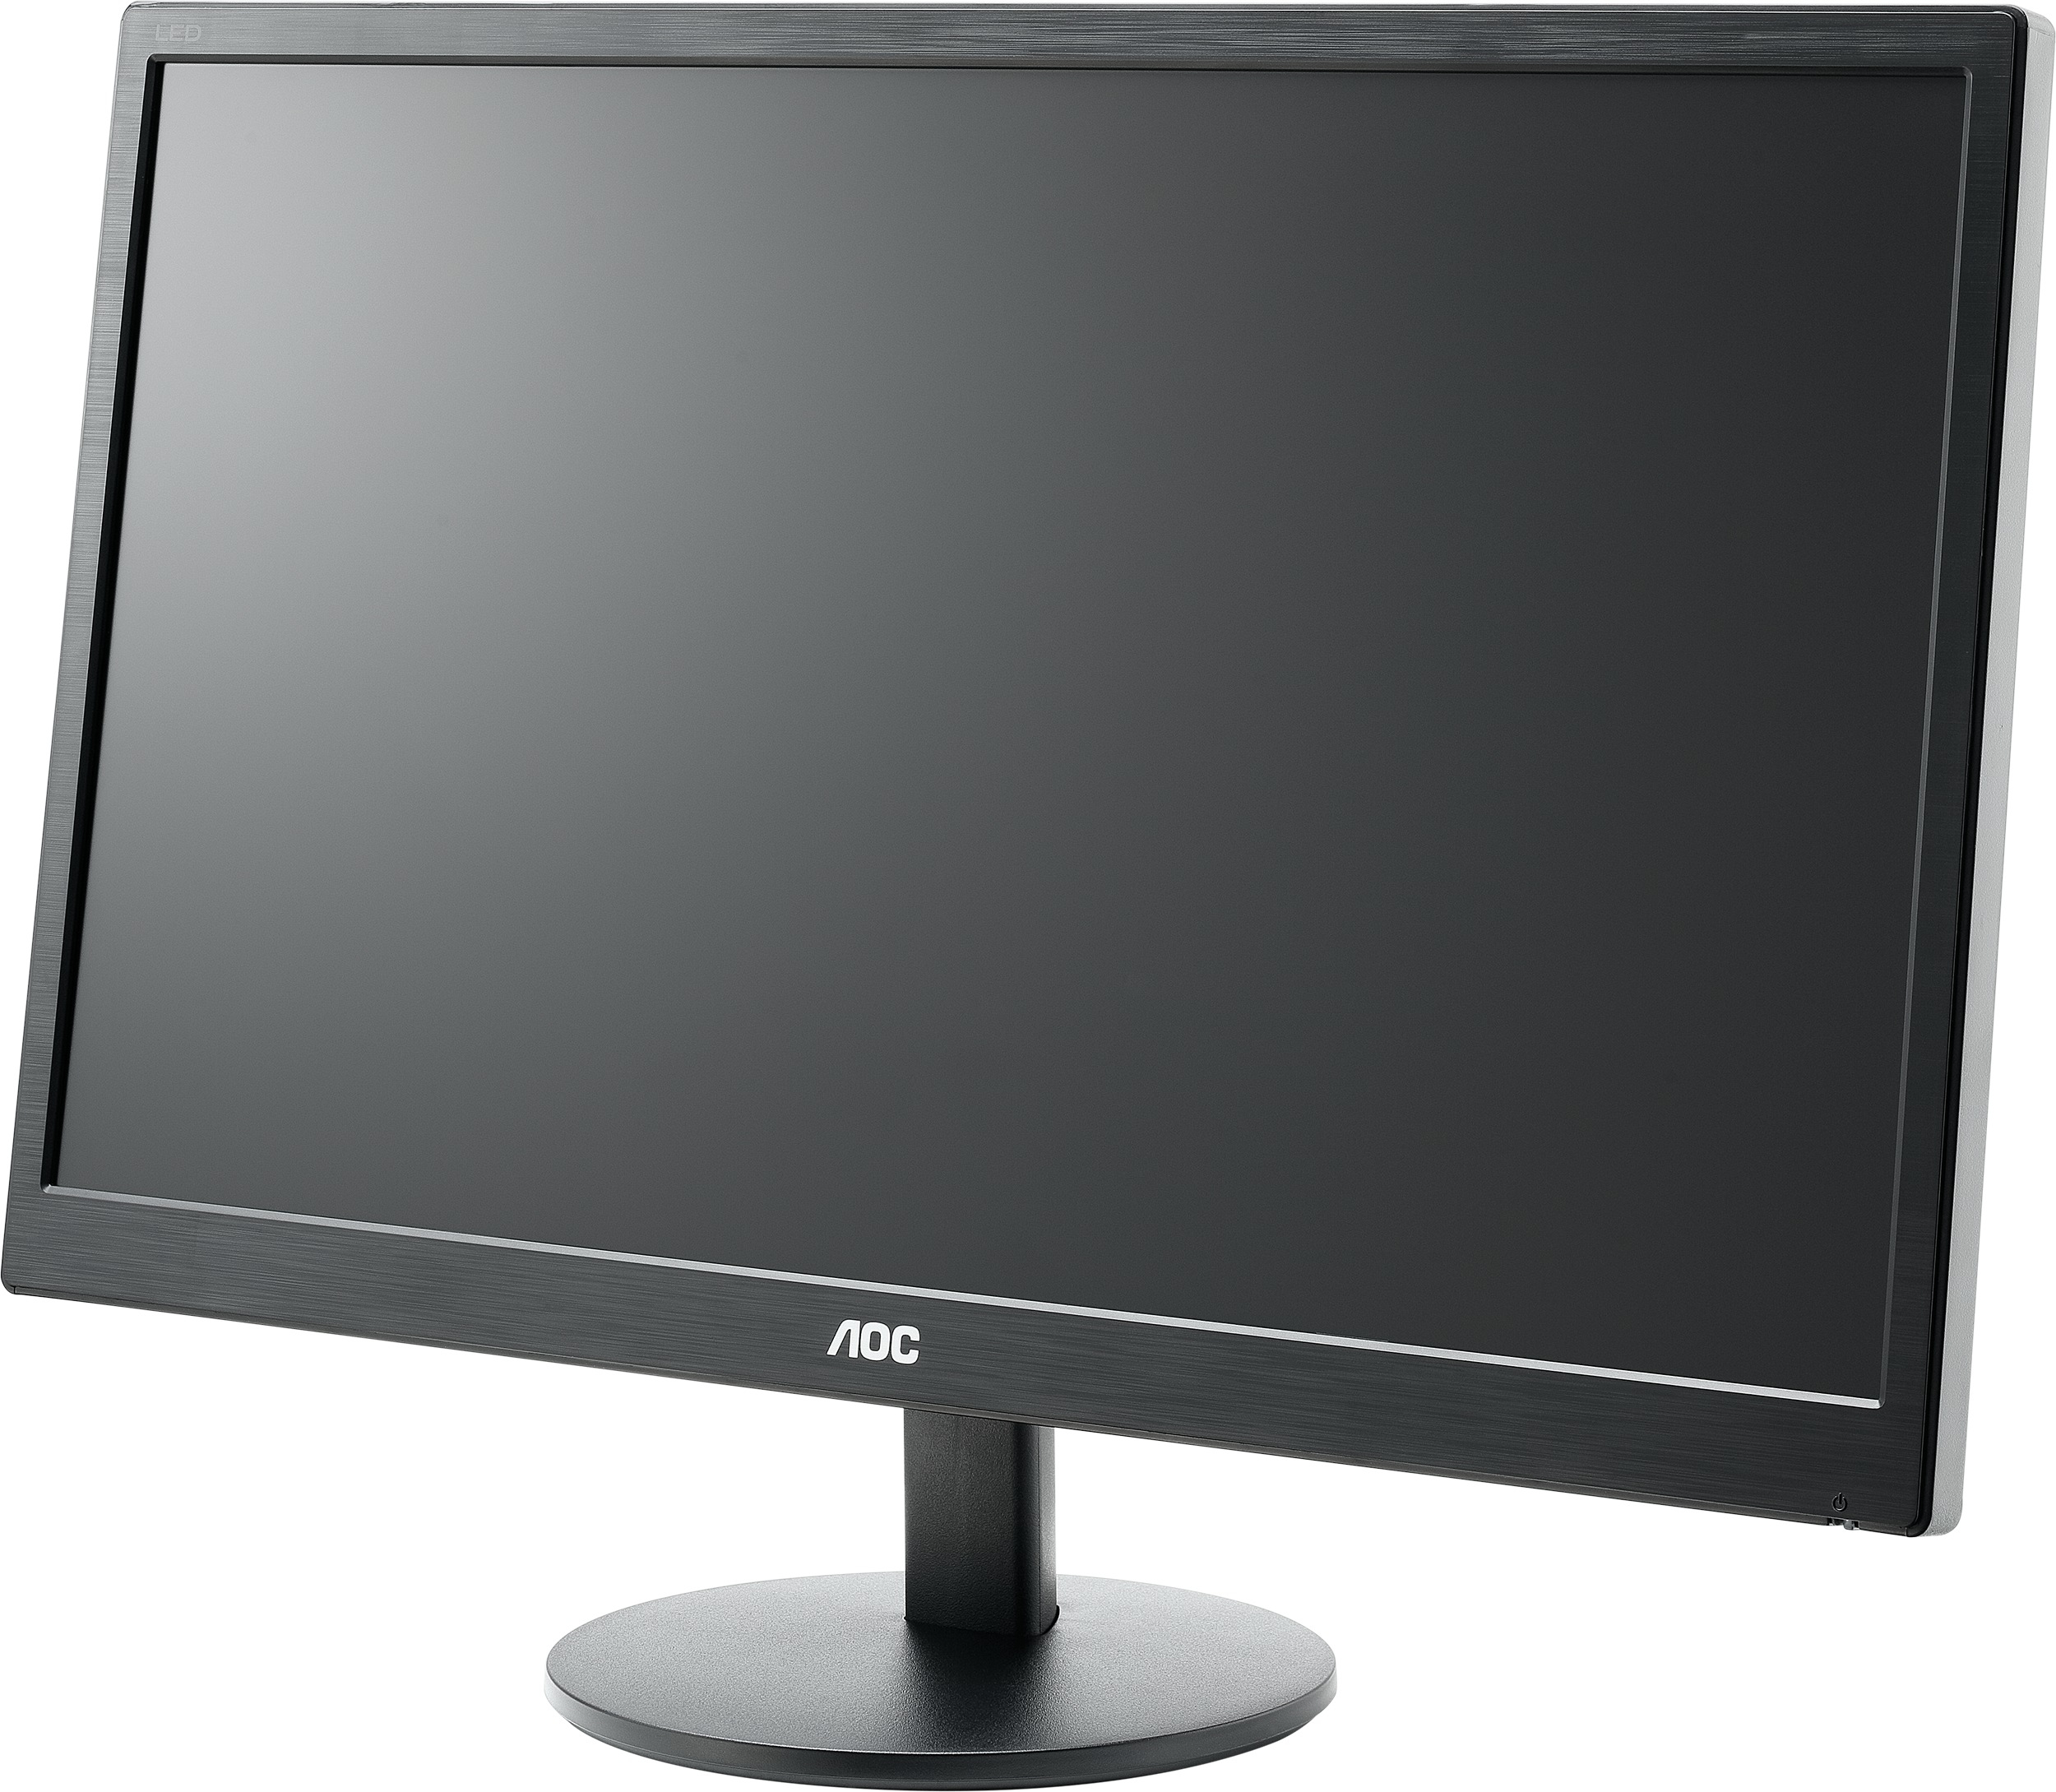 Monitor AOC 70 Series E2270SWDN LED display 54,6 cm (21.5